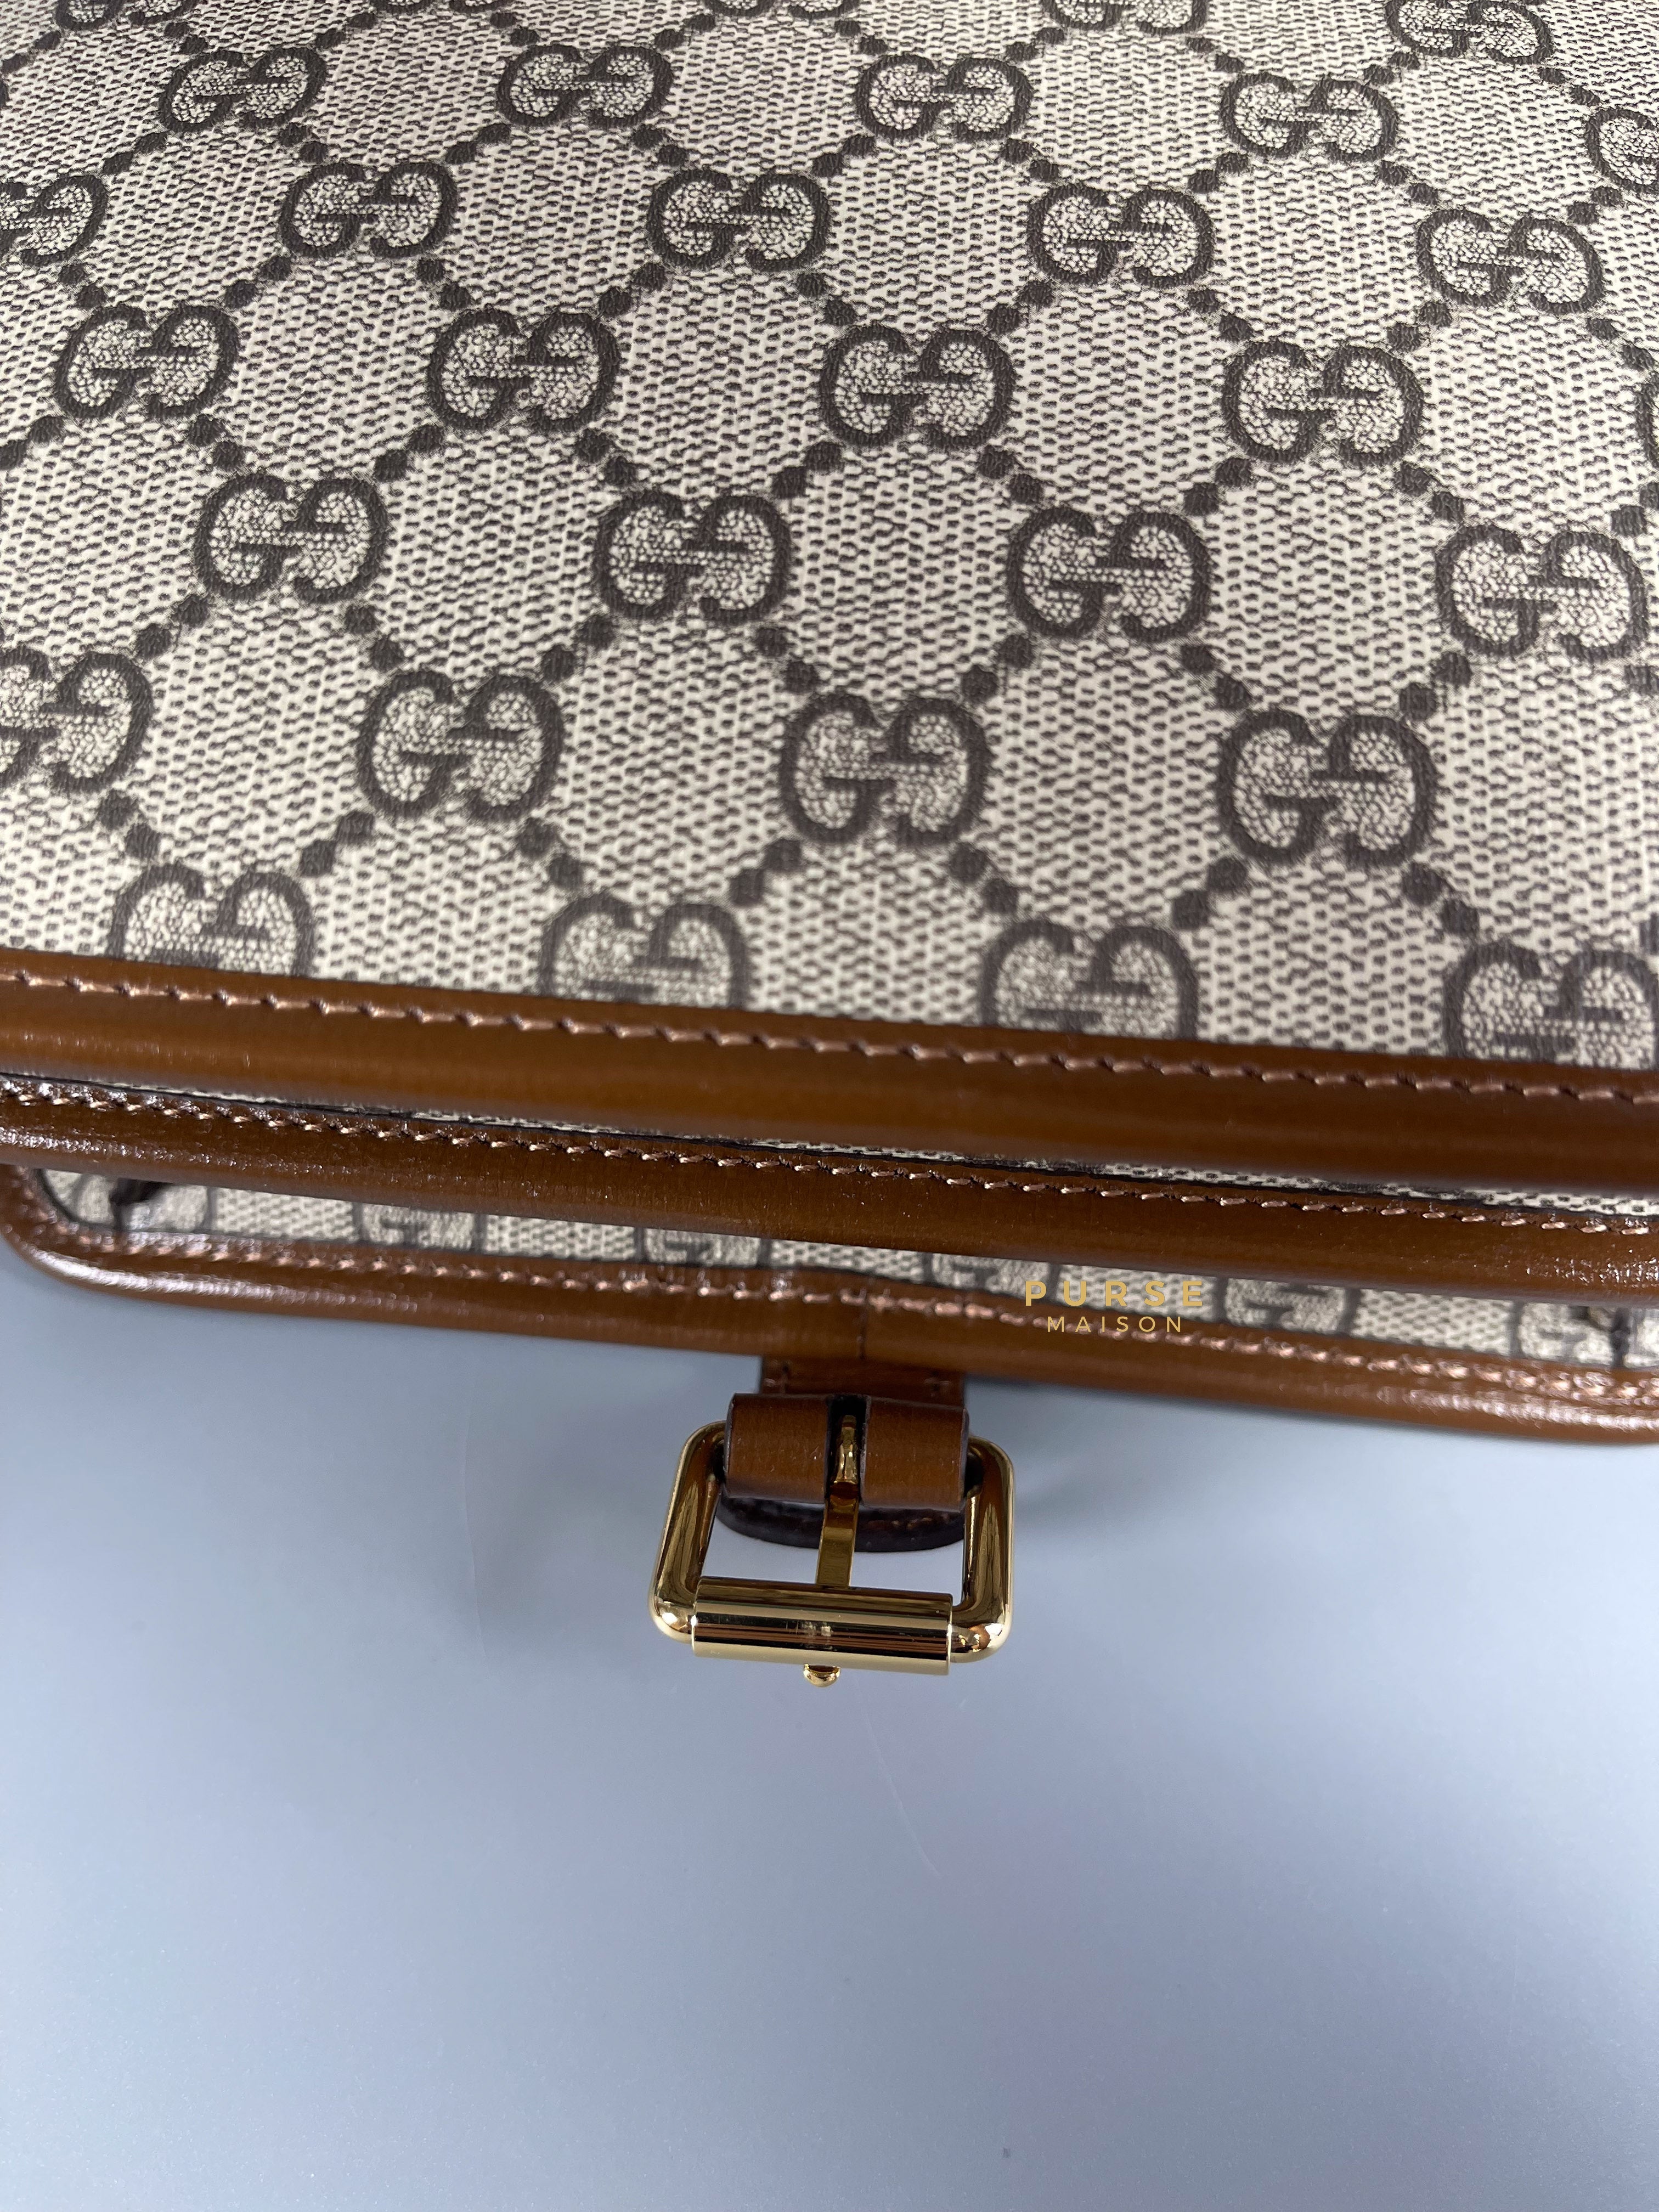 Gucci GG Supreme Azalea Calfskin Mini Retro Interlocking G Flap For Men | Purse Maison Luxury Bags Shop